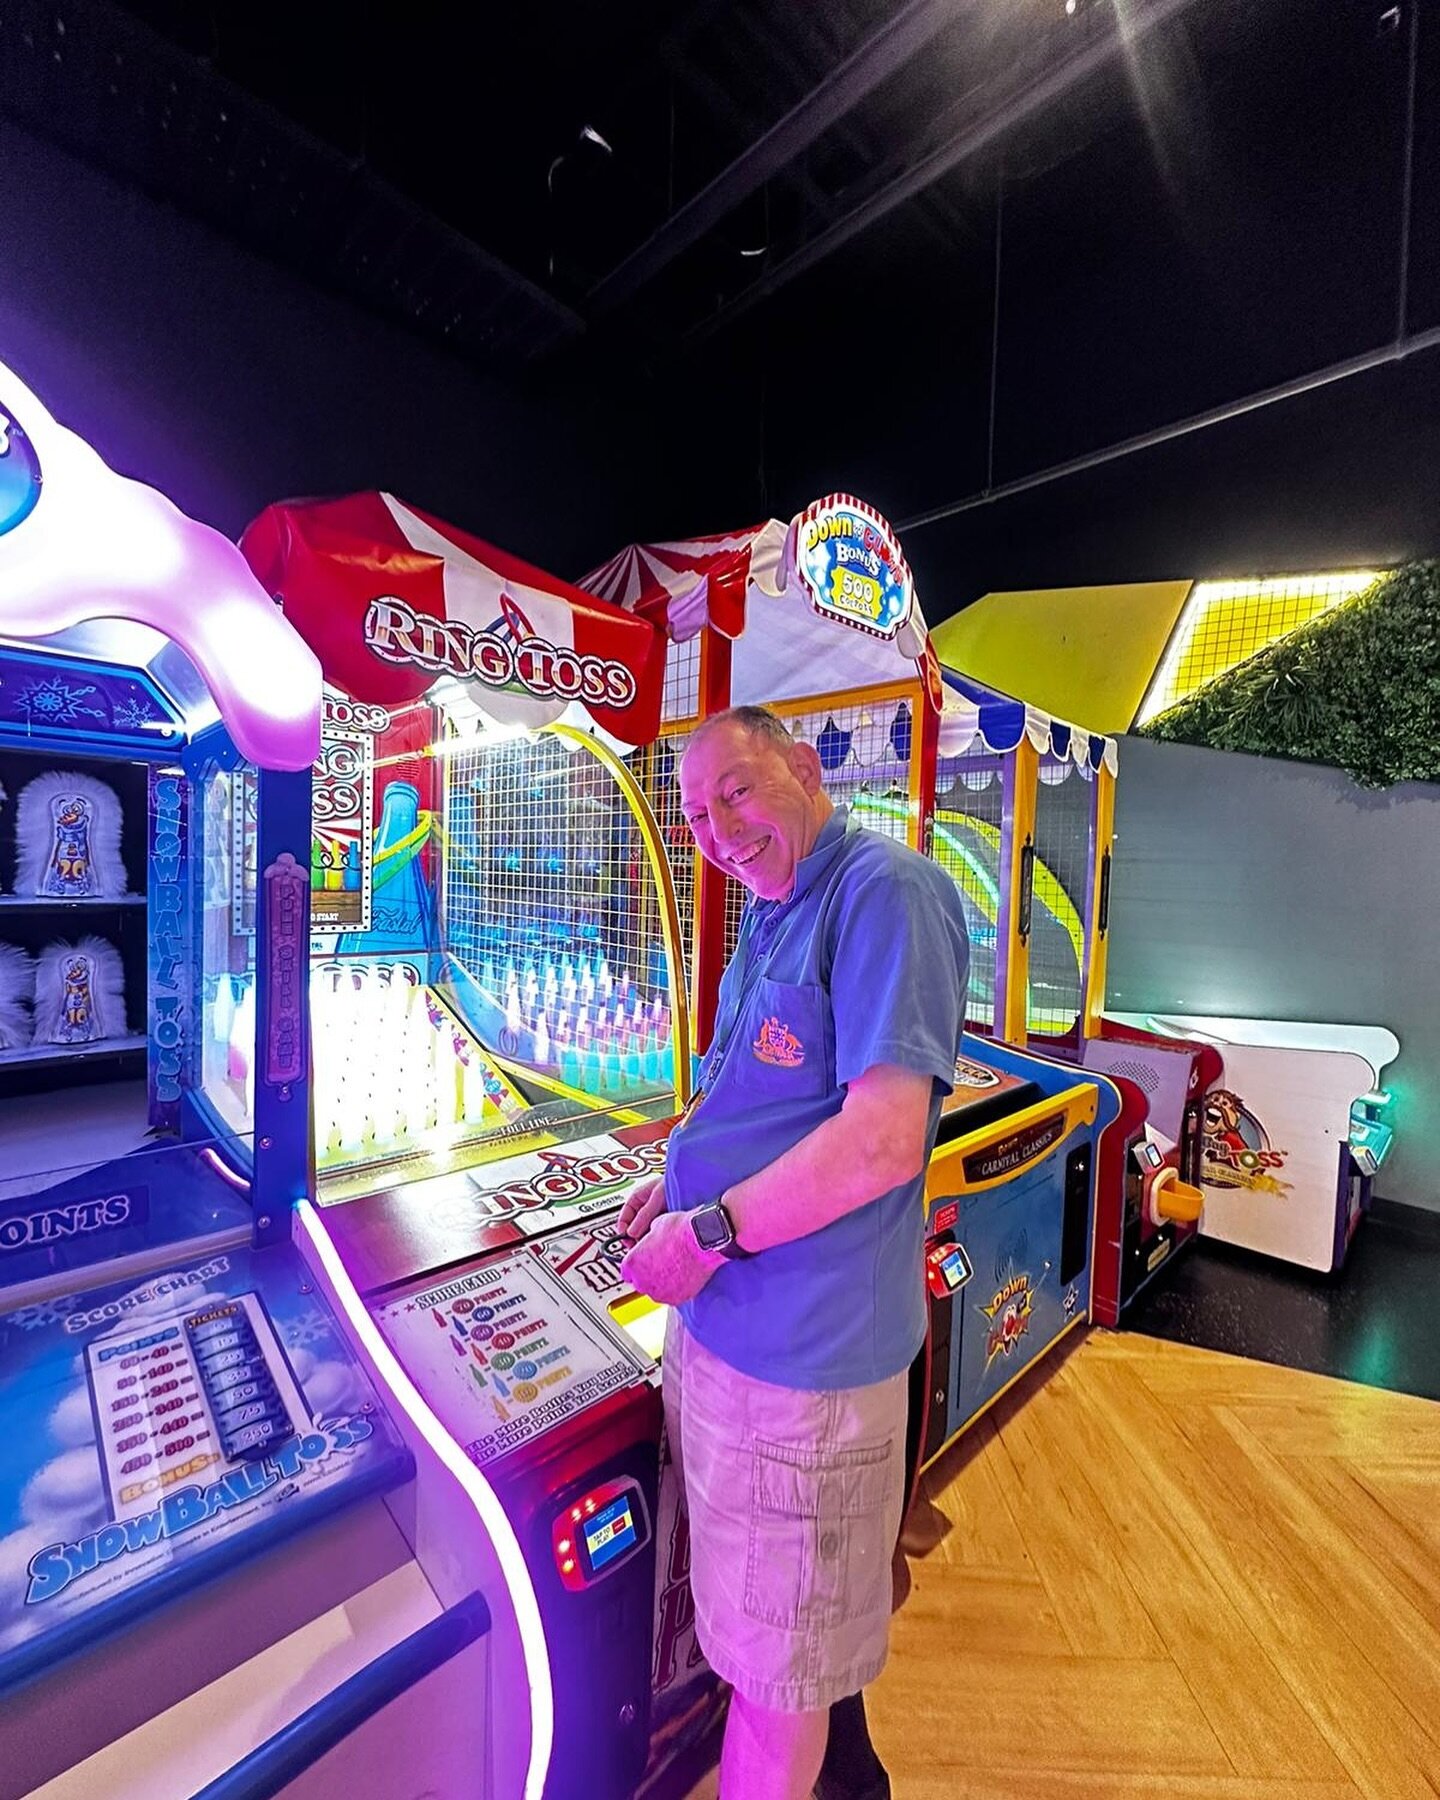 John winning at the arcade today! 🎯🕹️

🏷️ 
#smallbusinessmelbourne #smallbusinessvictoria #ndis #ndissupport #ndisaustralia #ndissupportcoordination #supportcoordination #disabilityawareness #disabilityinclusion #disabilitysupport #disabilityadvoc